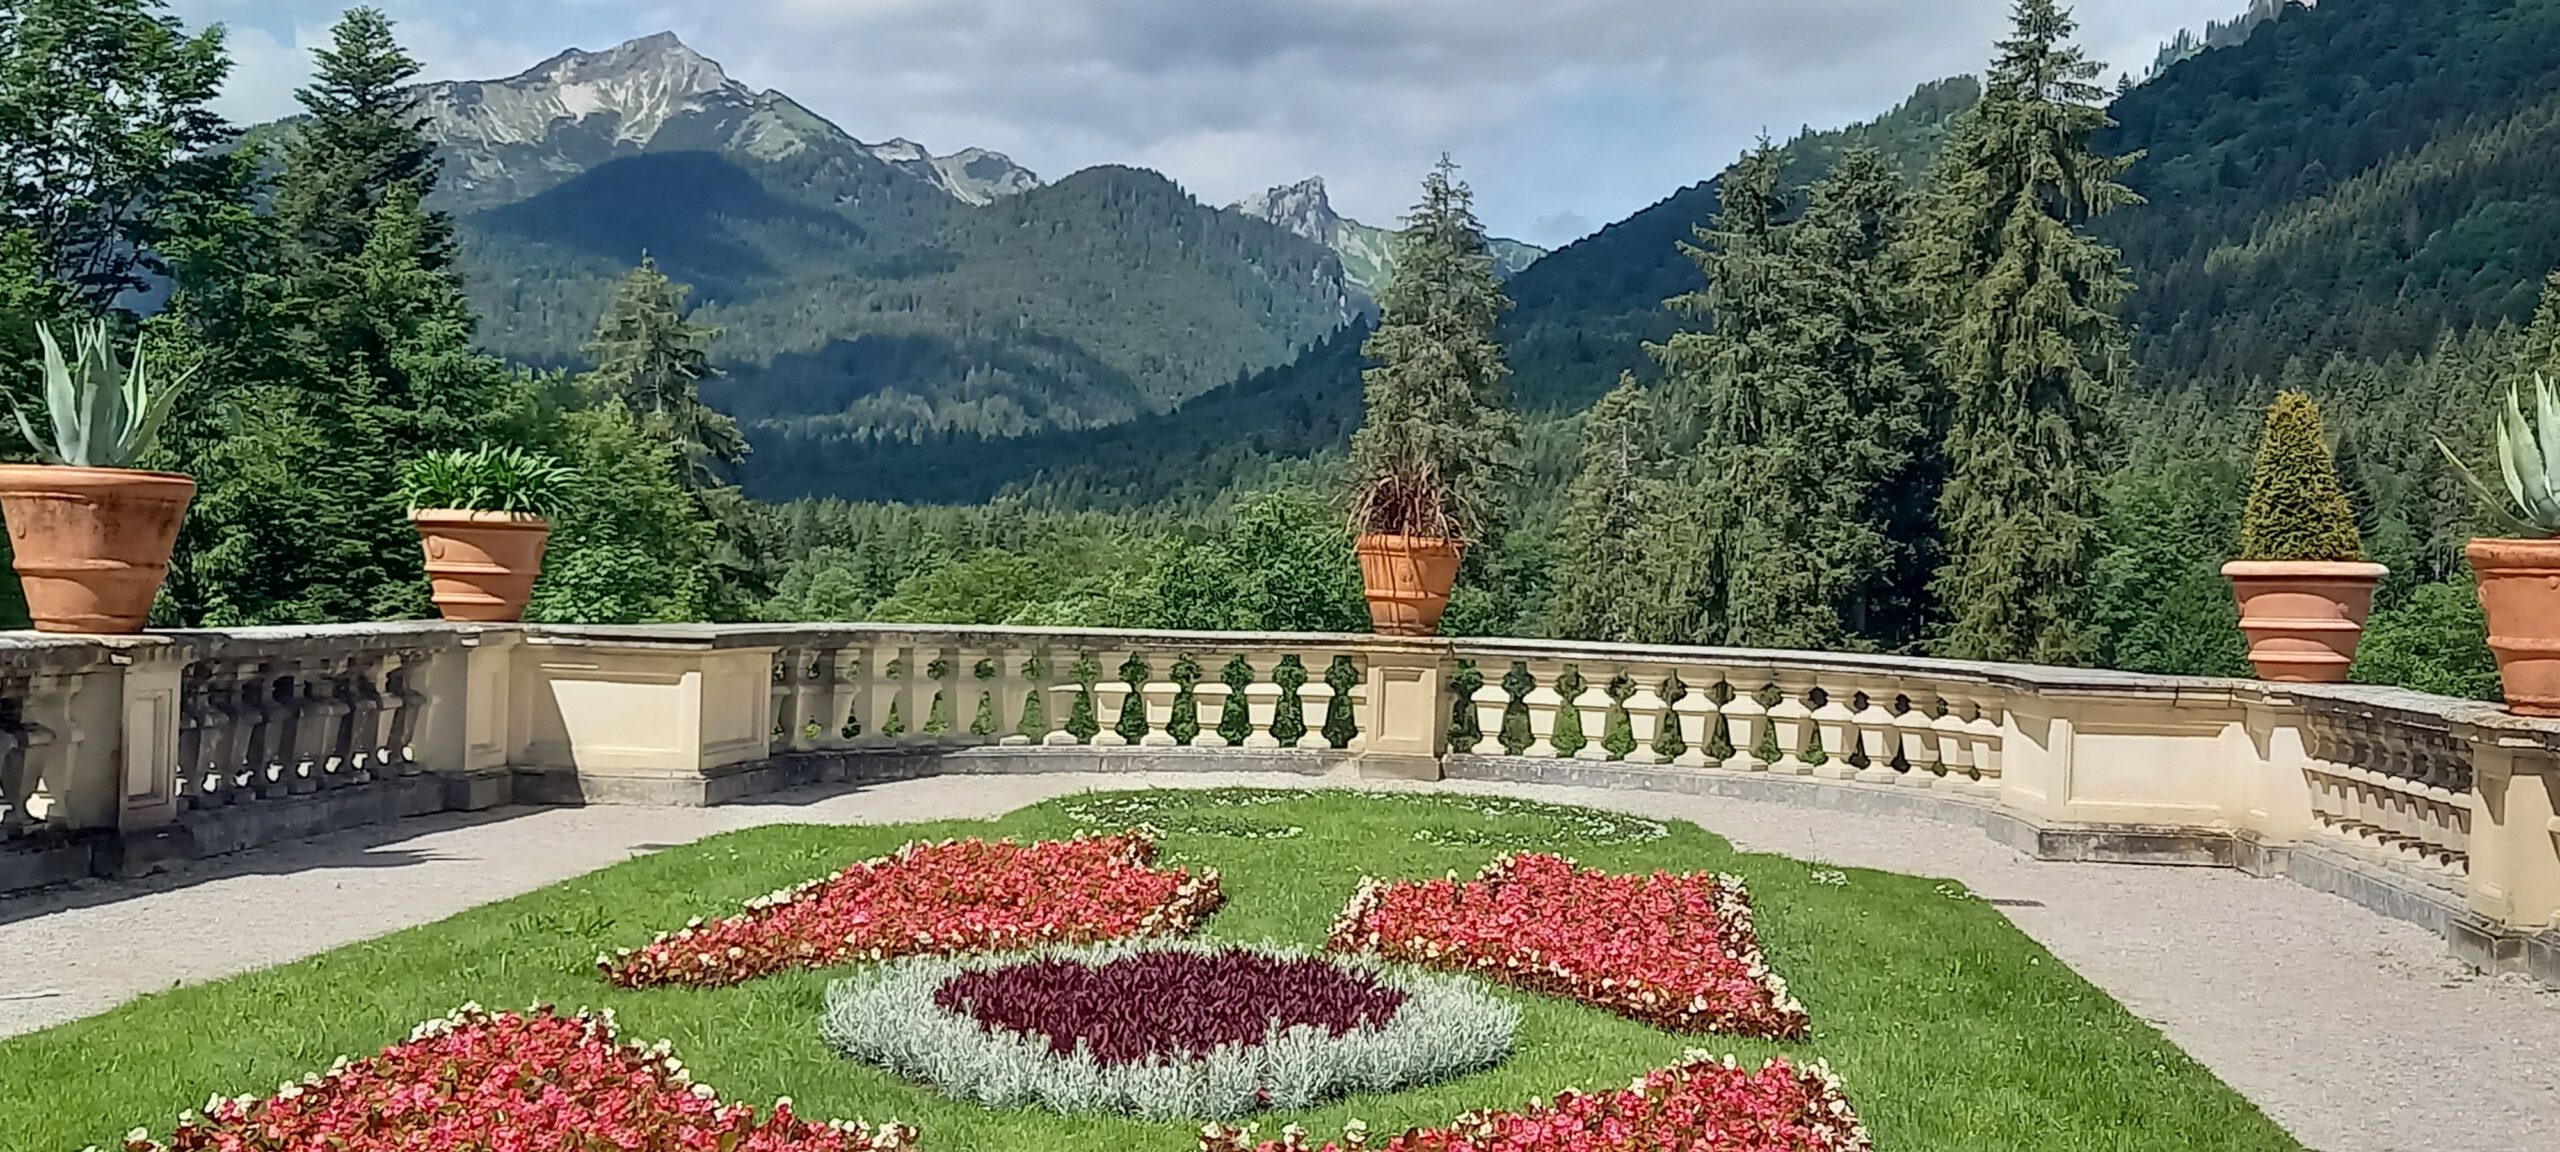 Schloss Linderhof. Blick auf Blumenbeet hin zu der Bergkulisse